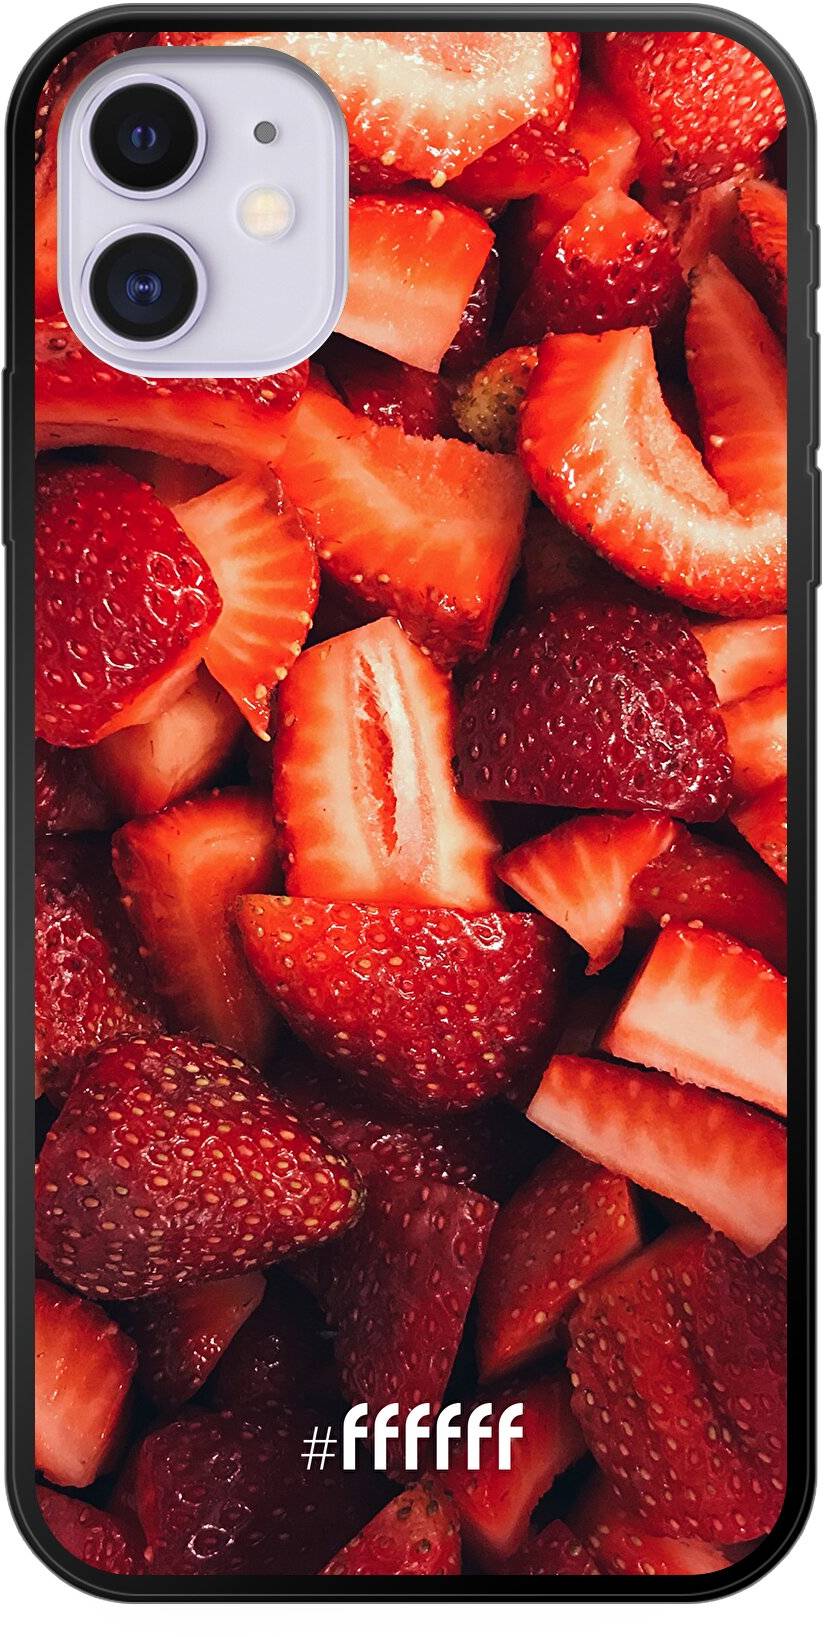 Strawberry Fields iPhone 11